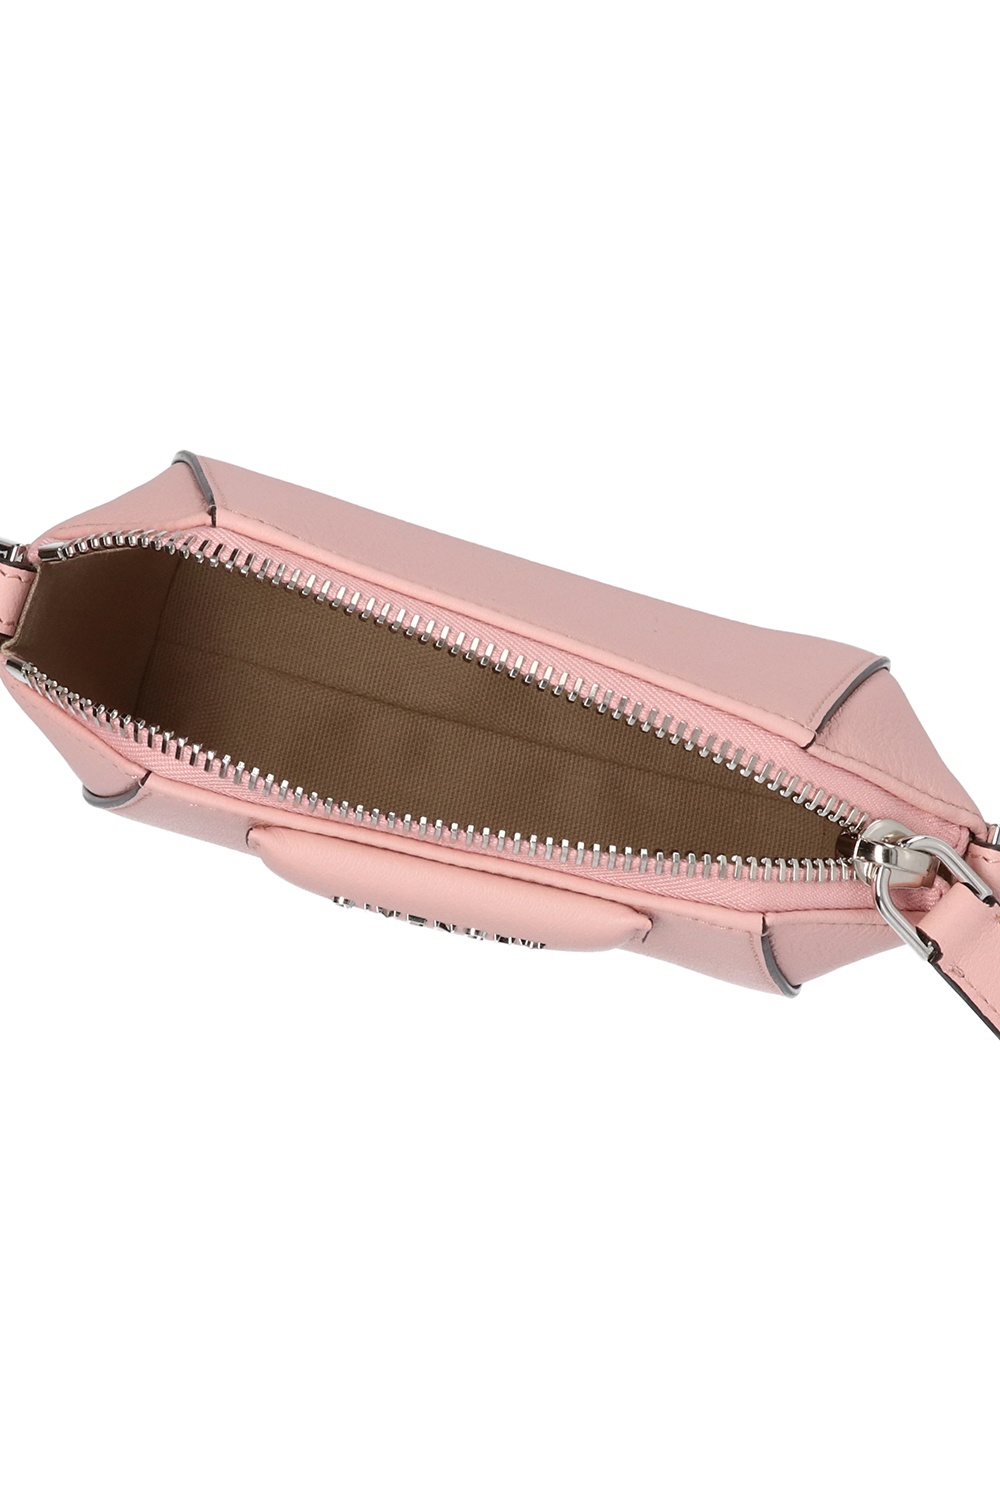 Givenchy Nano Antigona Crossbody Bag - Pink Crossbody Bags